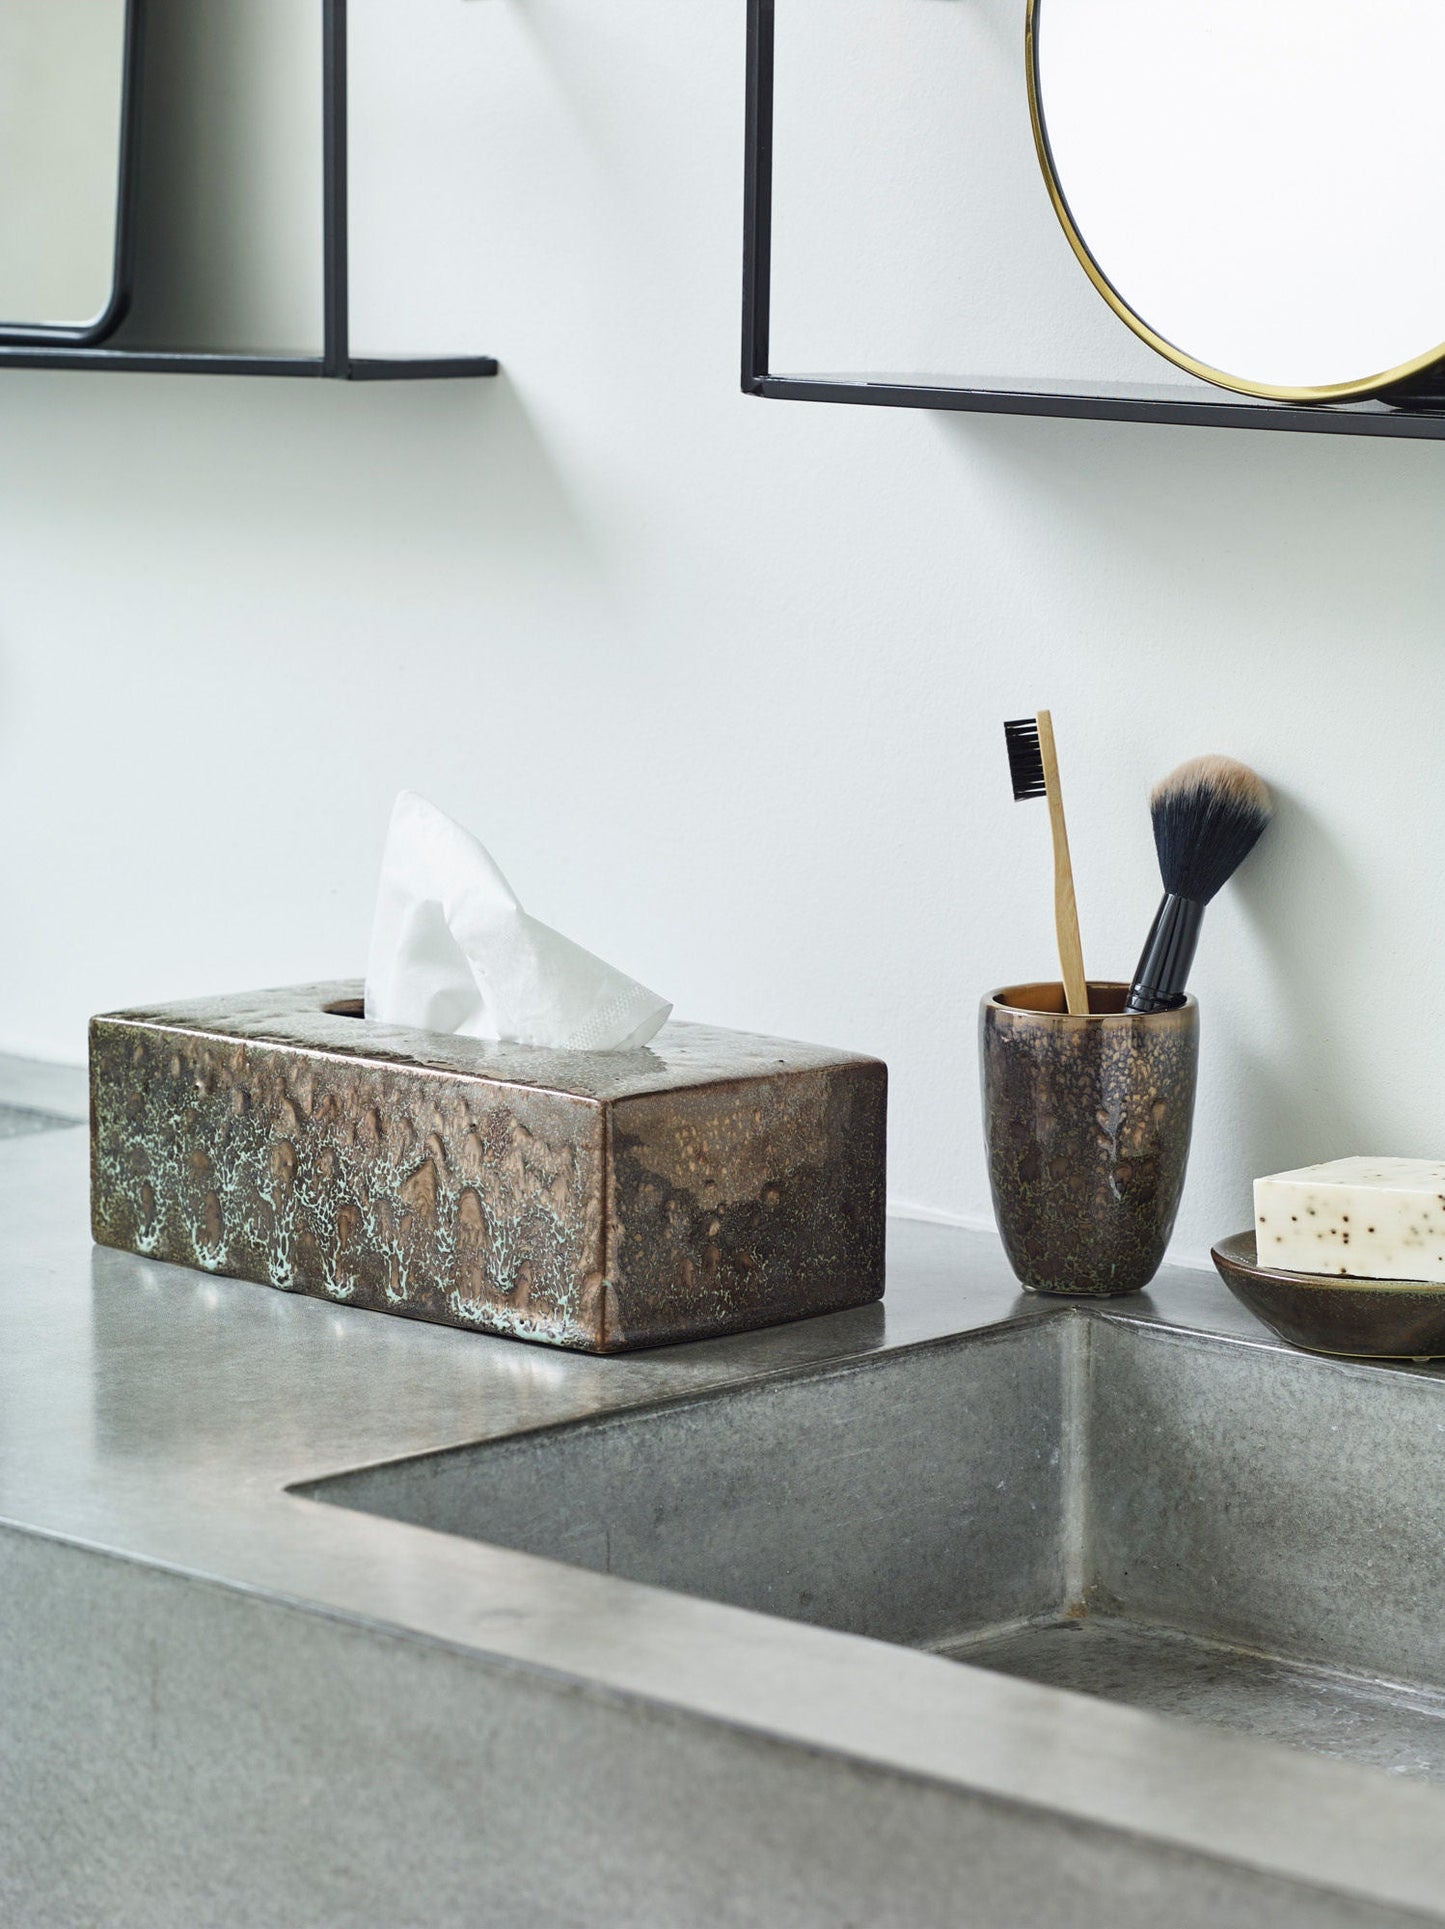 Vintage Bronze Bathroom Accessories - Toothbrush Holder - |VESIMI Design| Luxury and Rustic bathrooms online